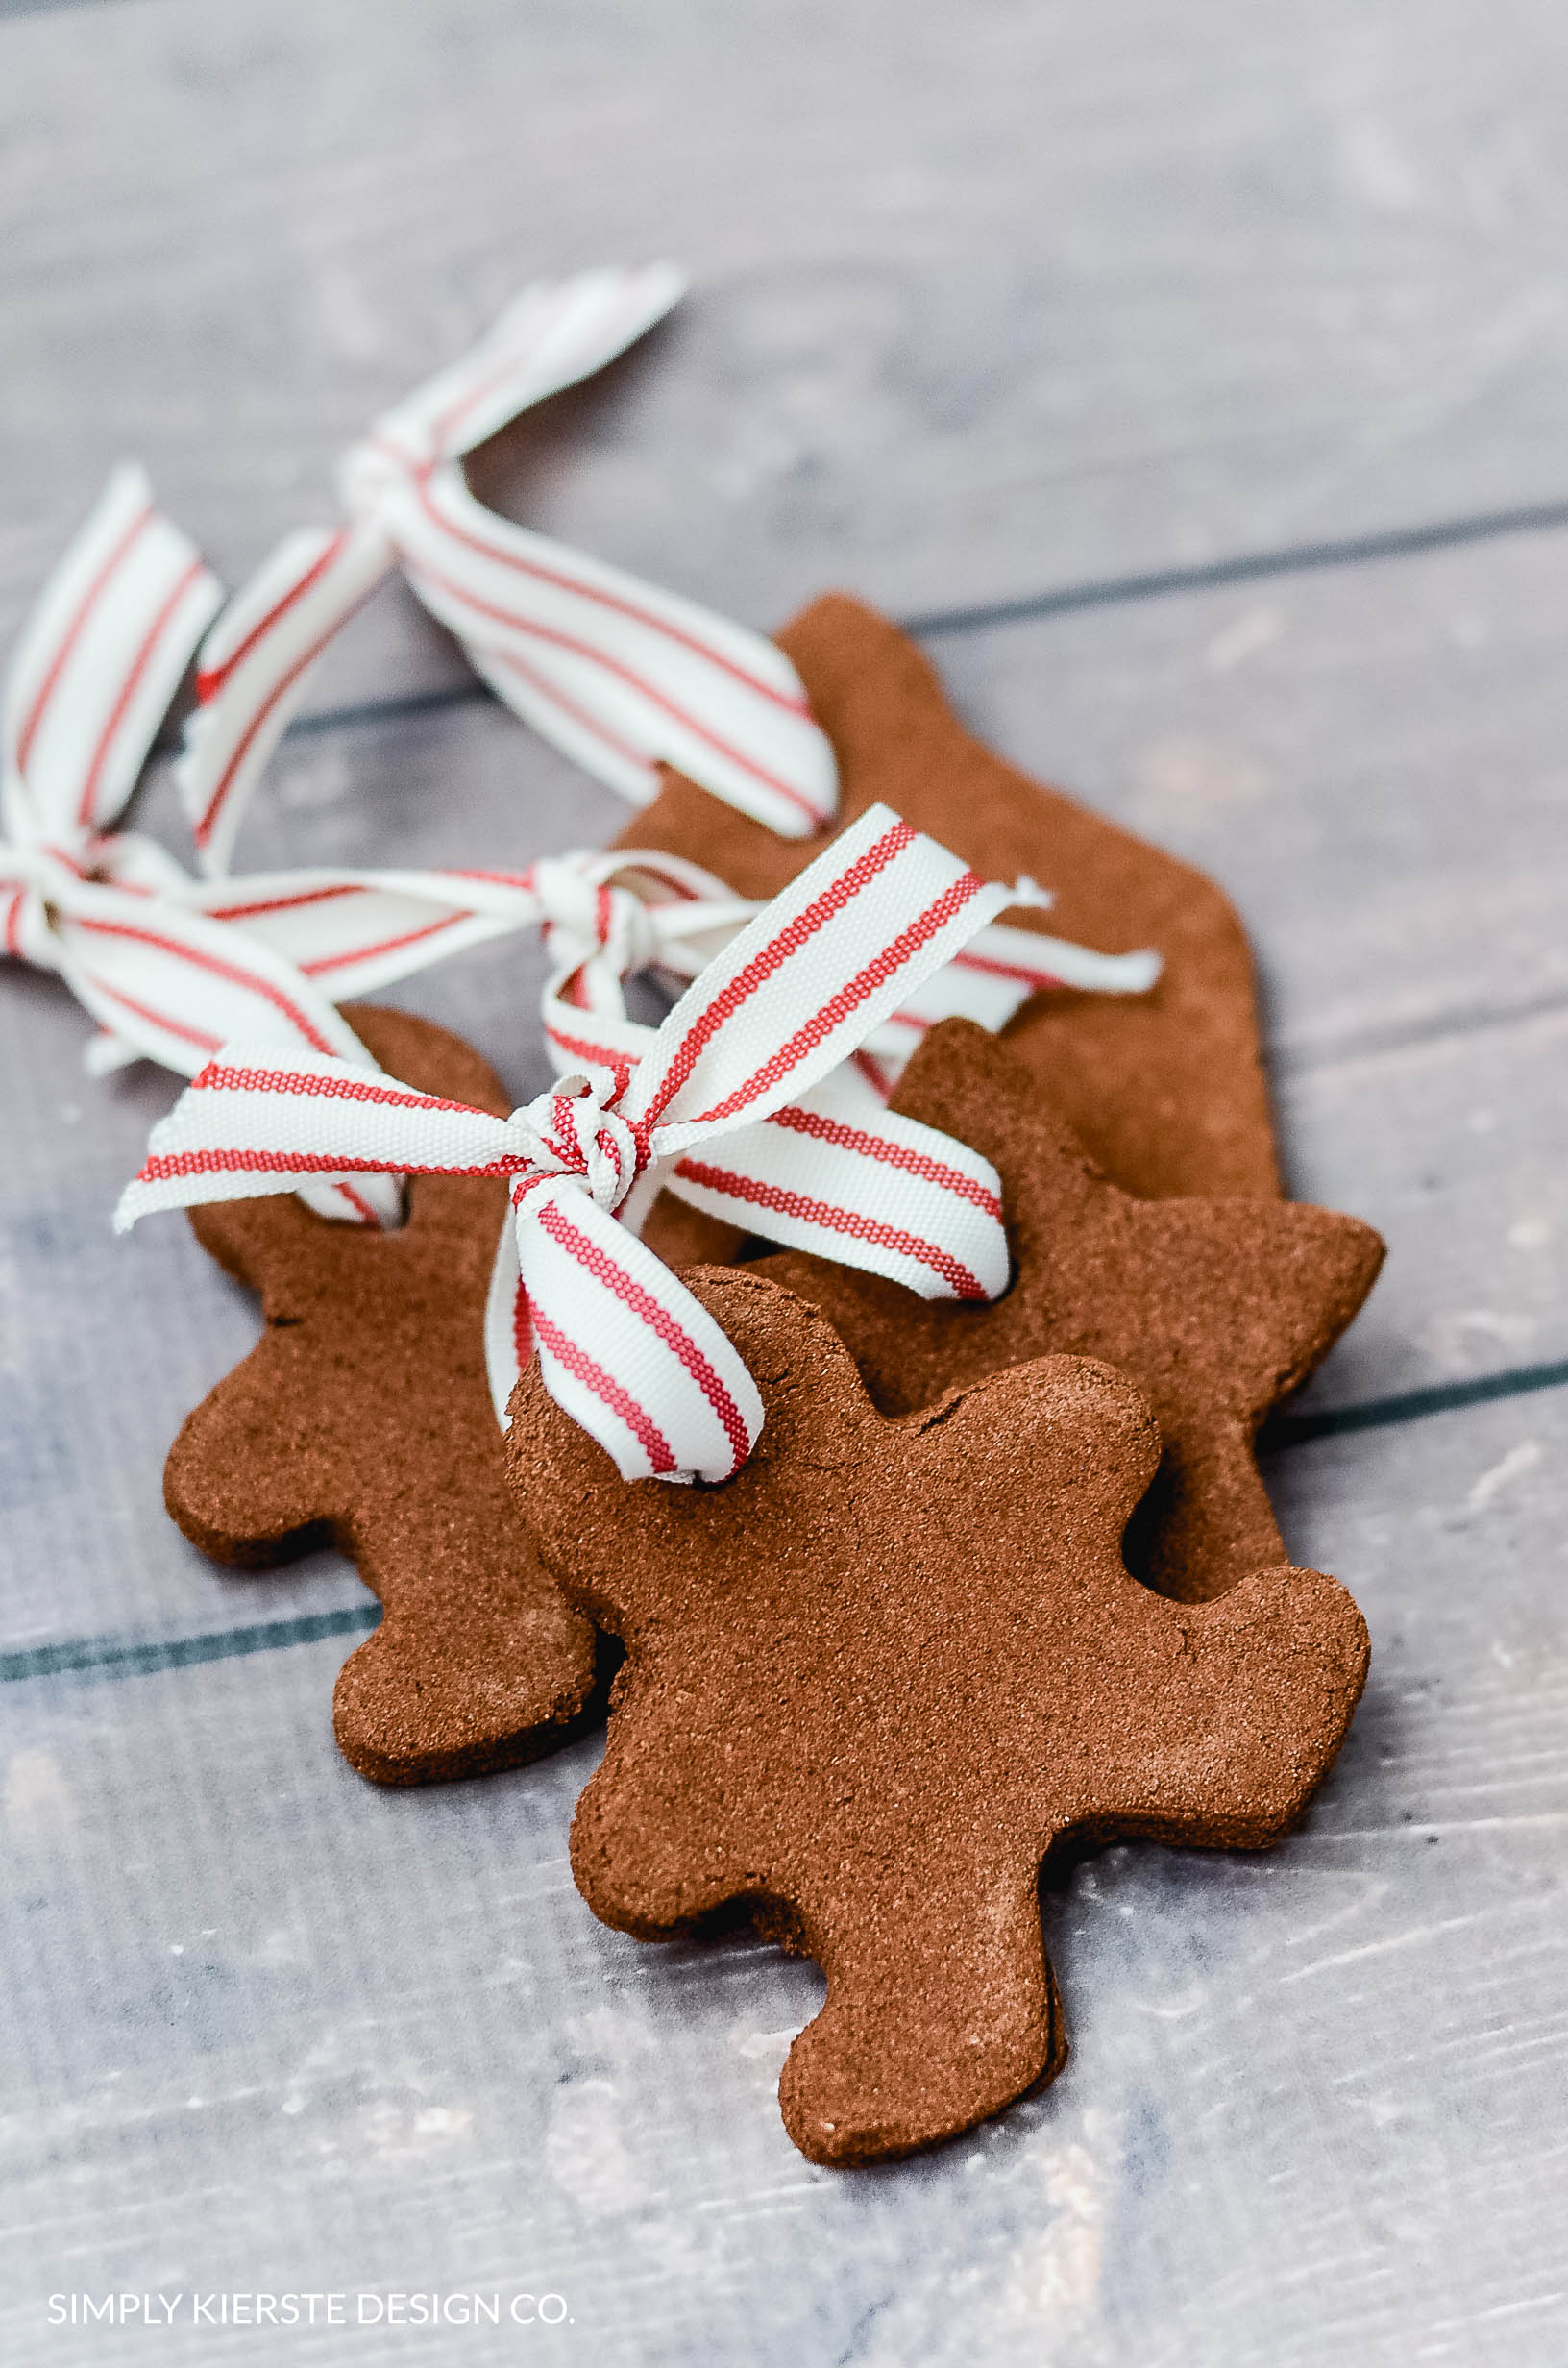 Easy Handmade Cinnamon Ornaments | Christmas Ornaments | oldsaltfarm.com #handmadeornaments #diyornaments #easychristmasideas